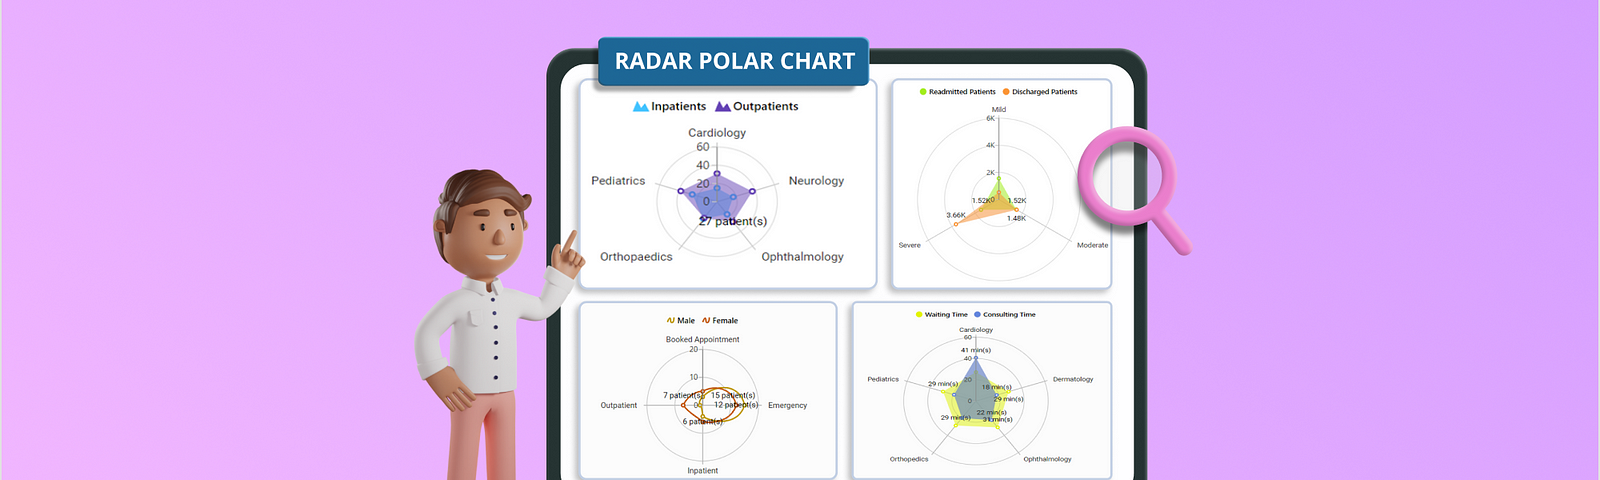 Visualizing Clinical Data with Radar Polar Charts